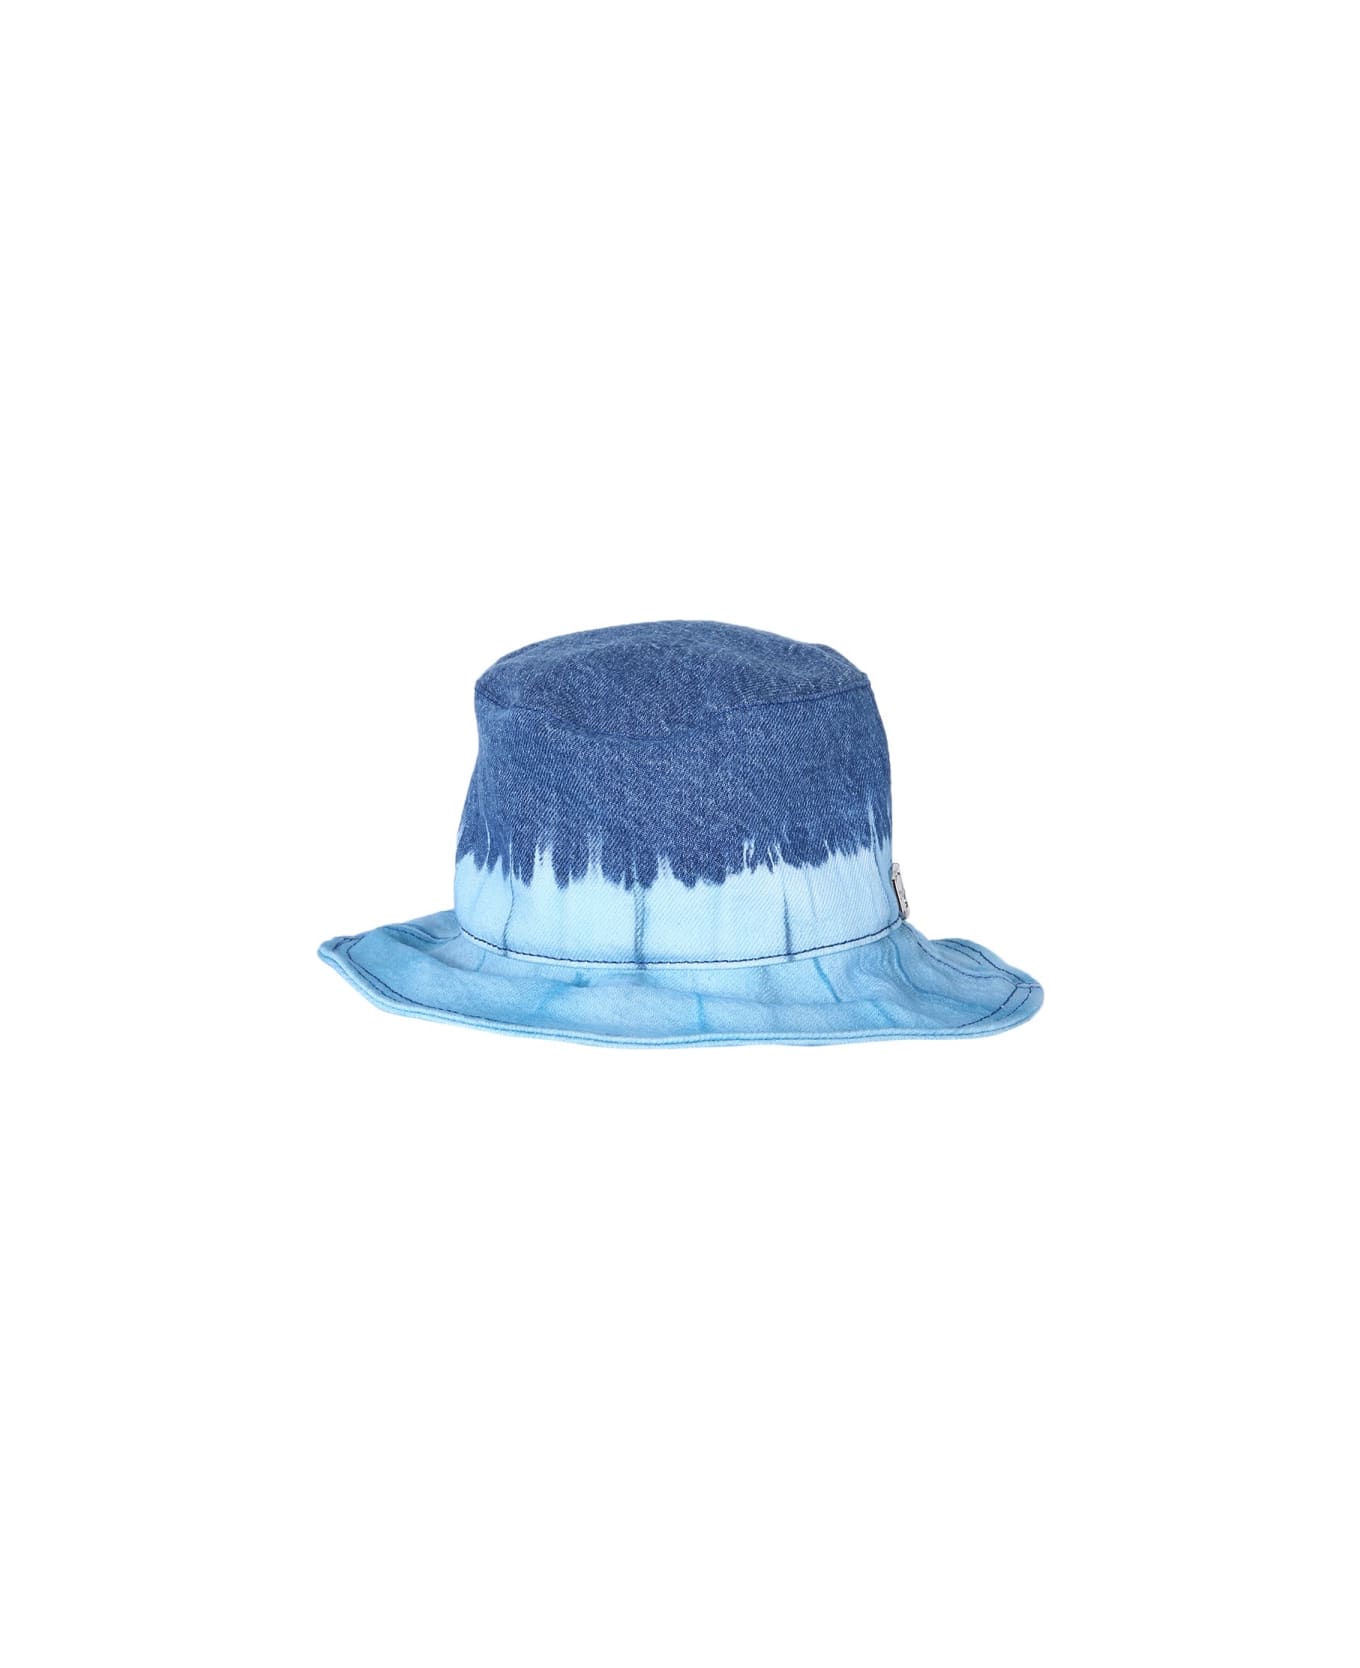 Alberta Ferretti Bucket Hat With Tie Dye Print - BLUE 帽子